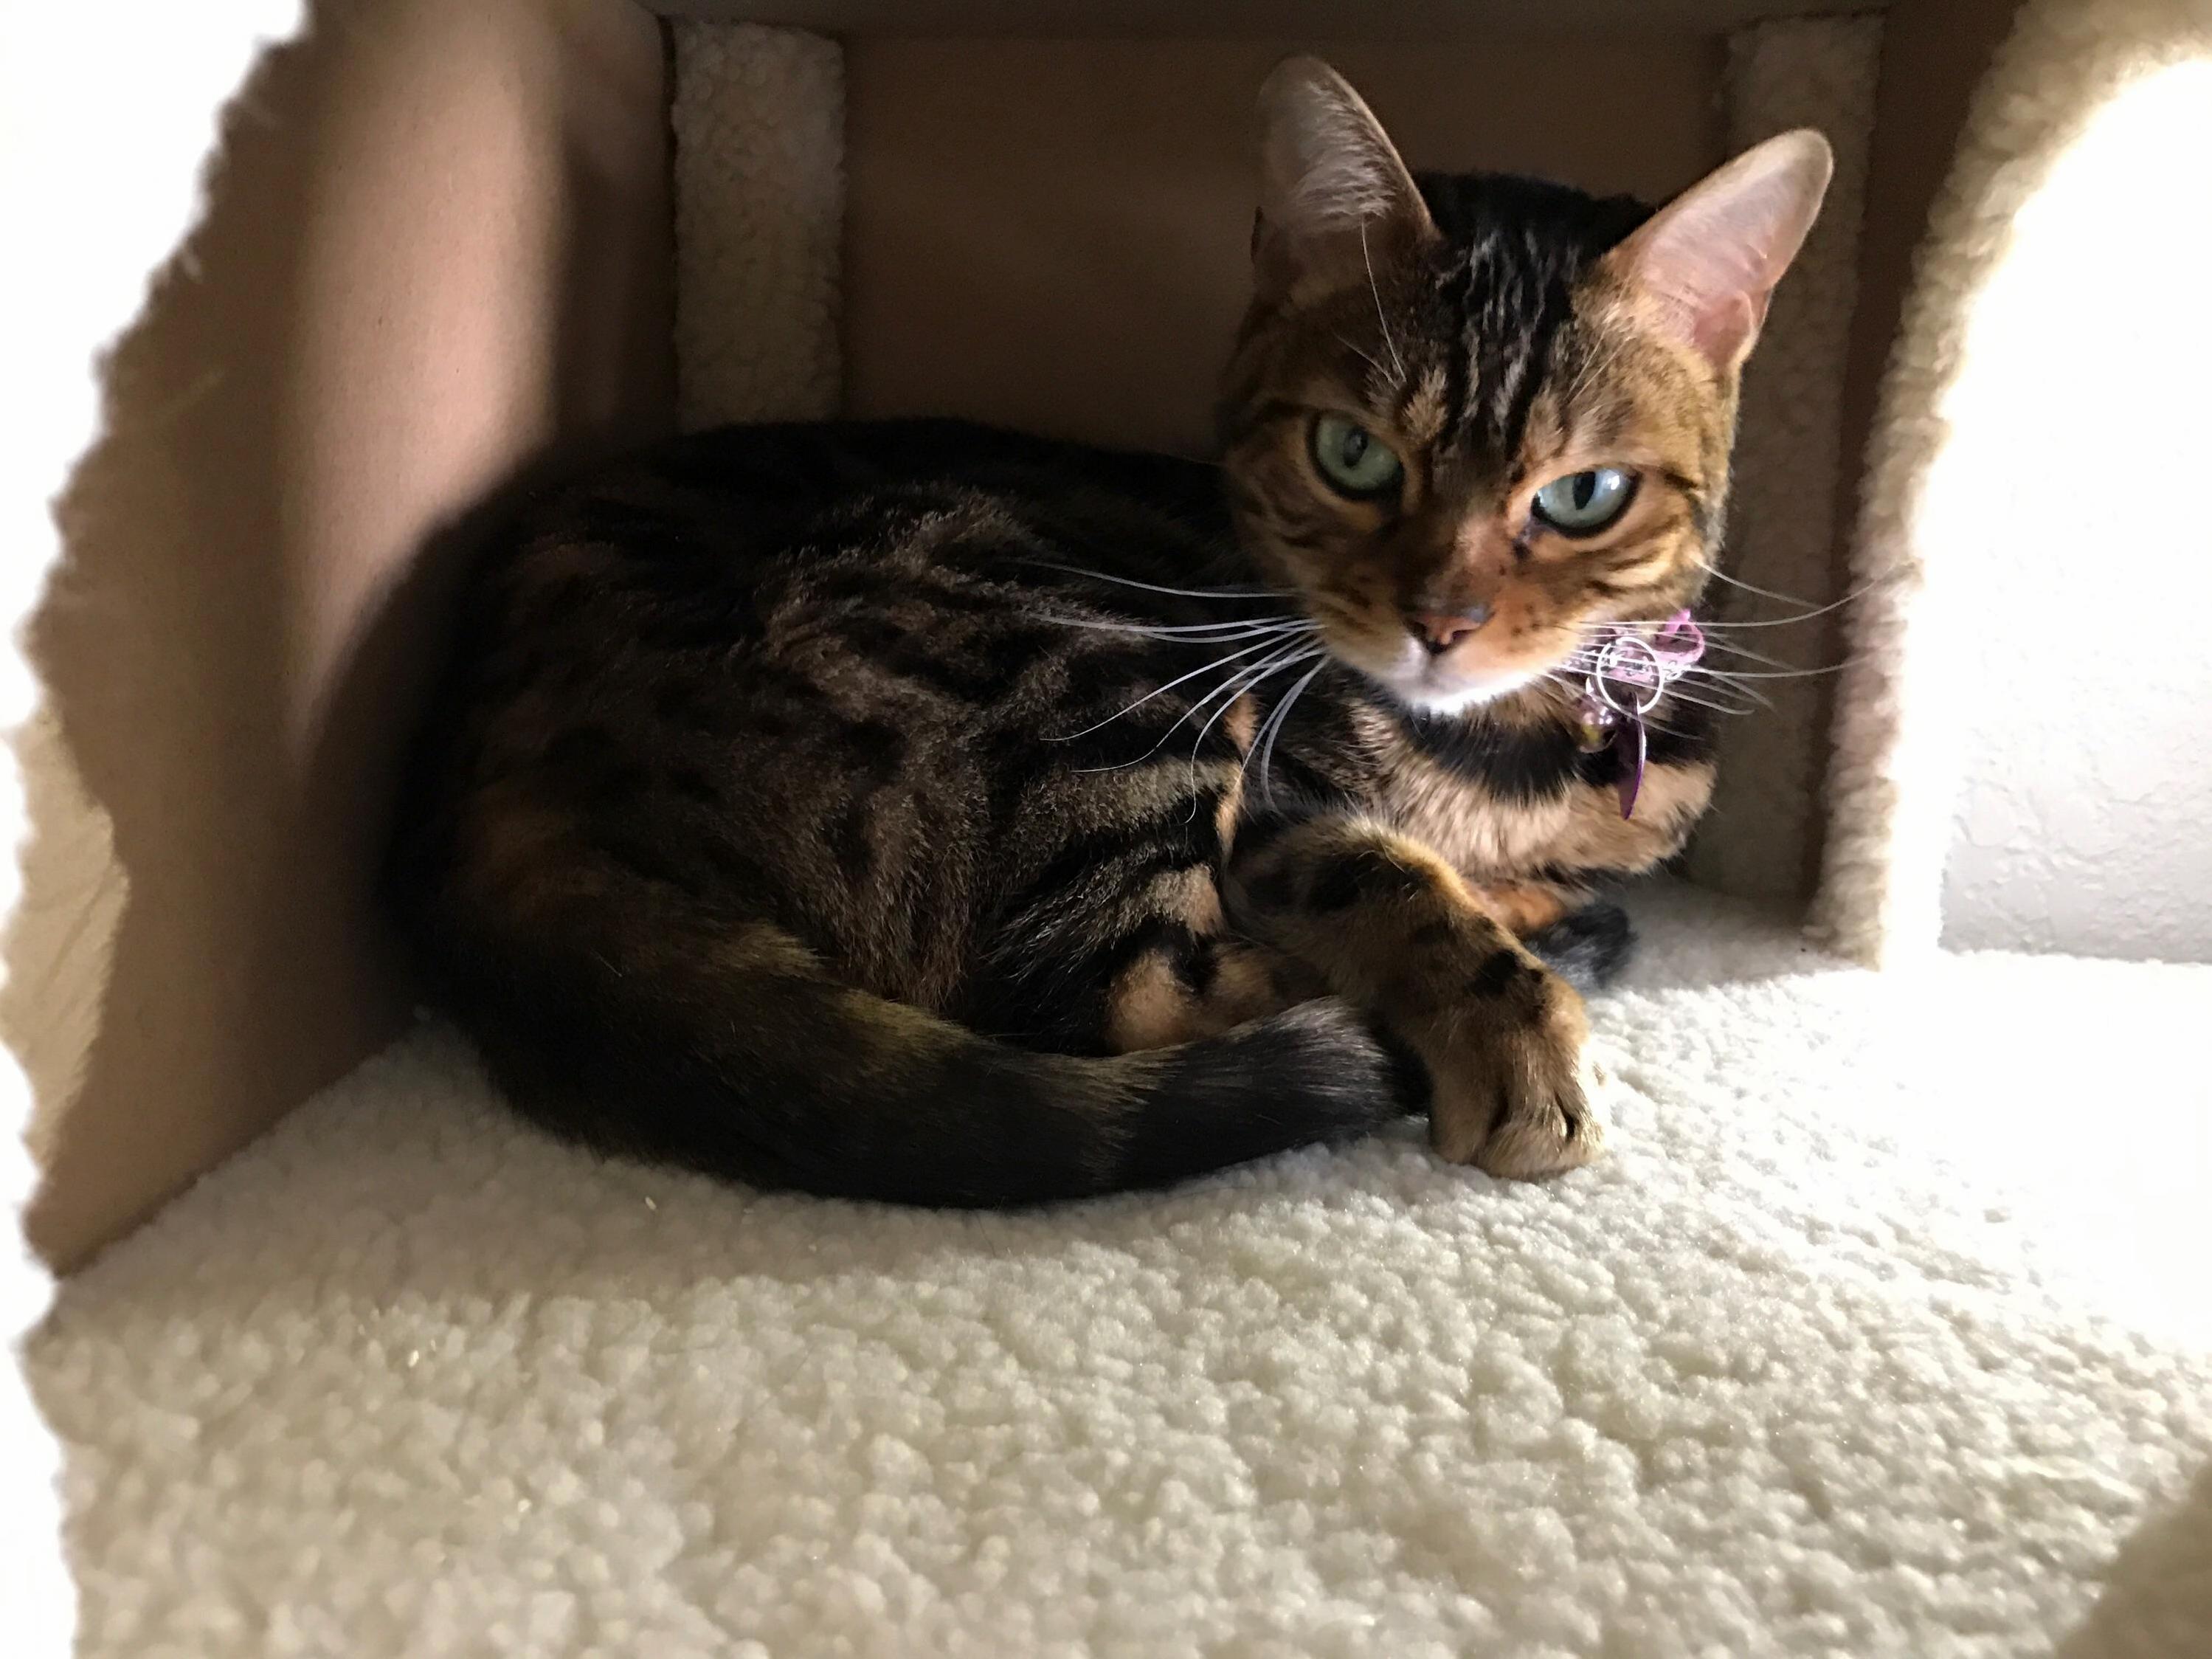 Muffin posing in her cat condo